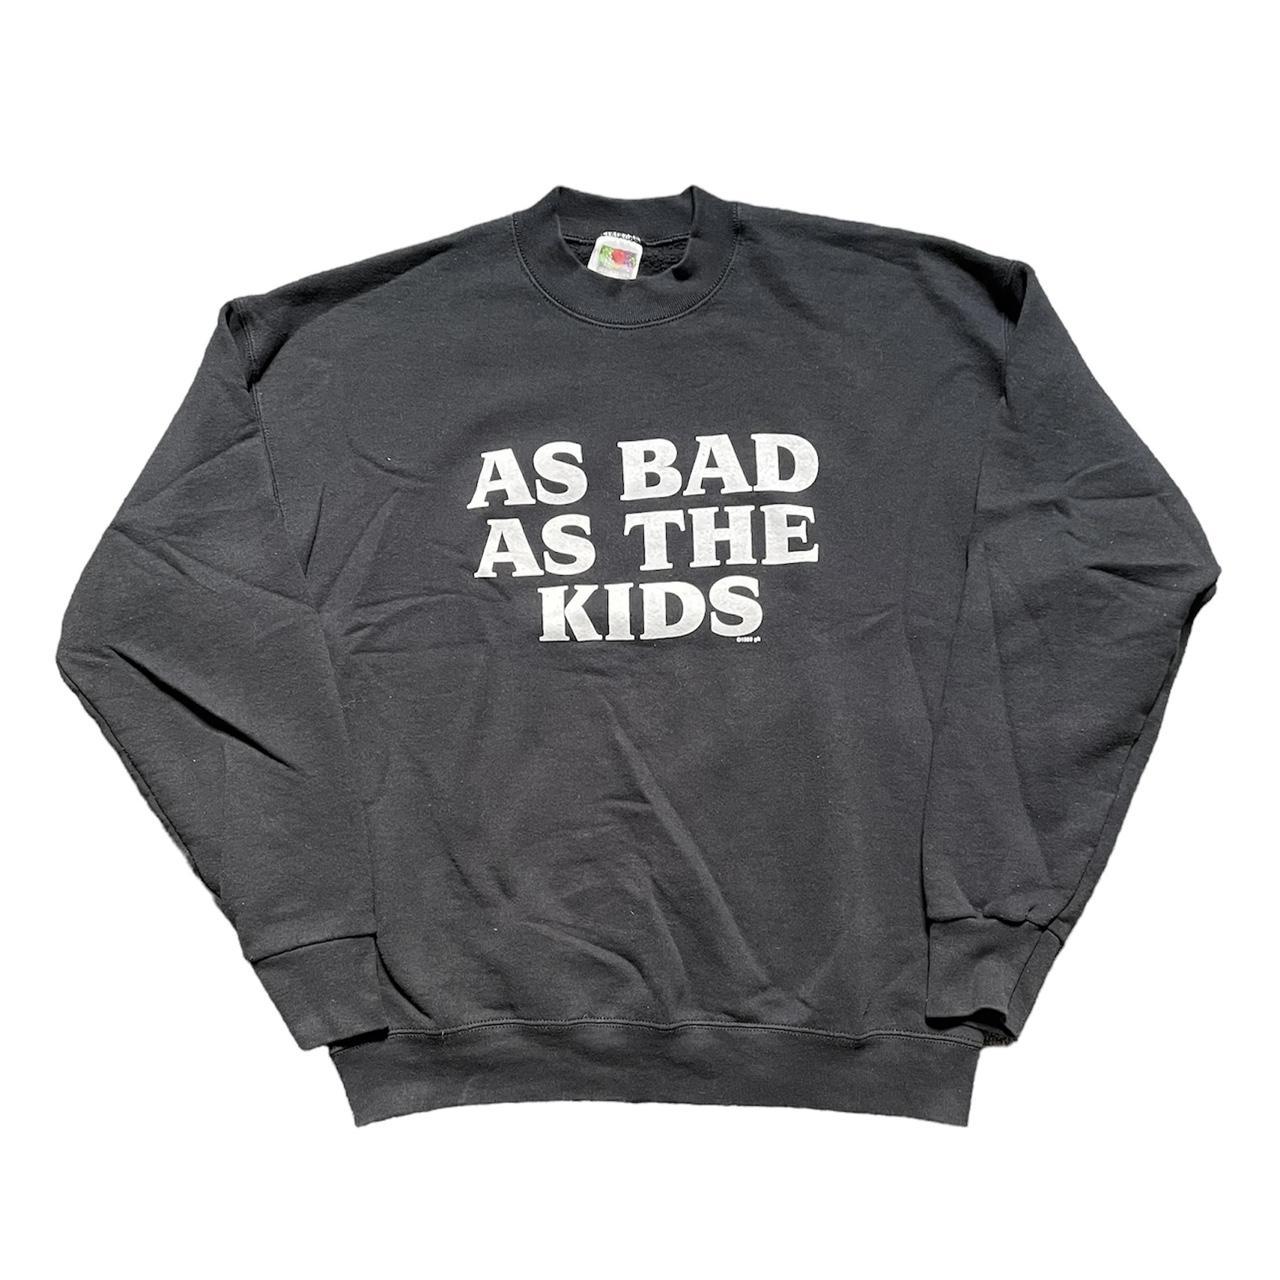 Vintage Humor Crewneck Sweatshirt, Size L, As bad as...